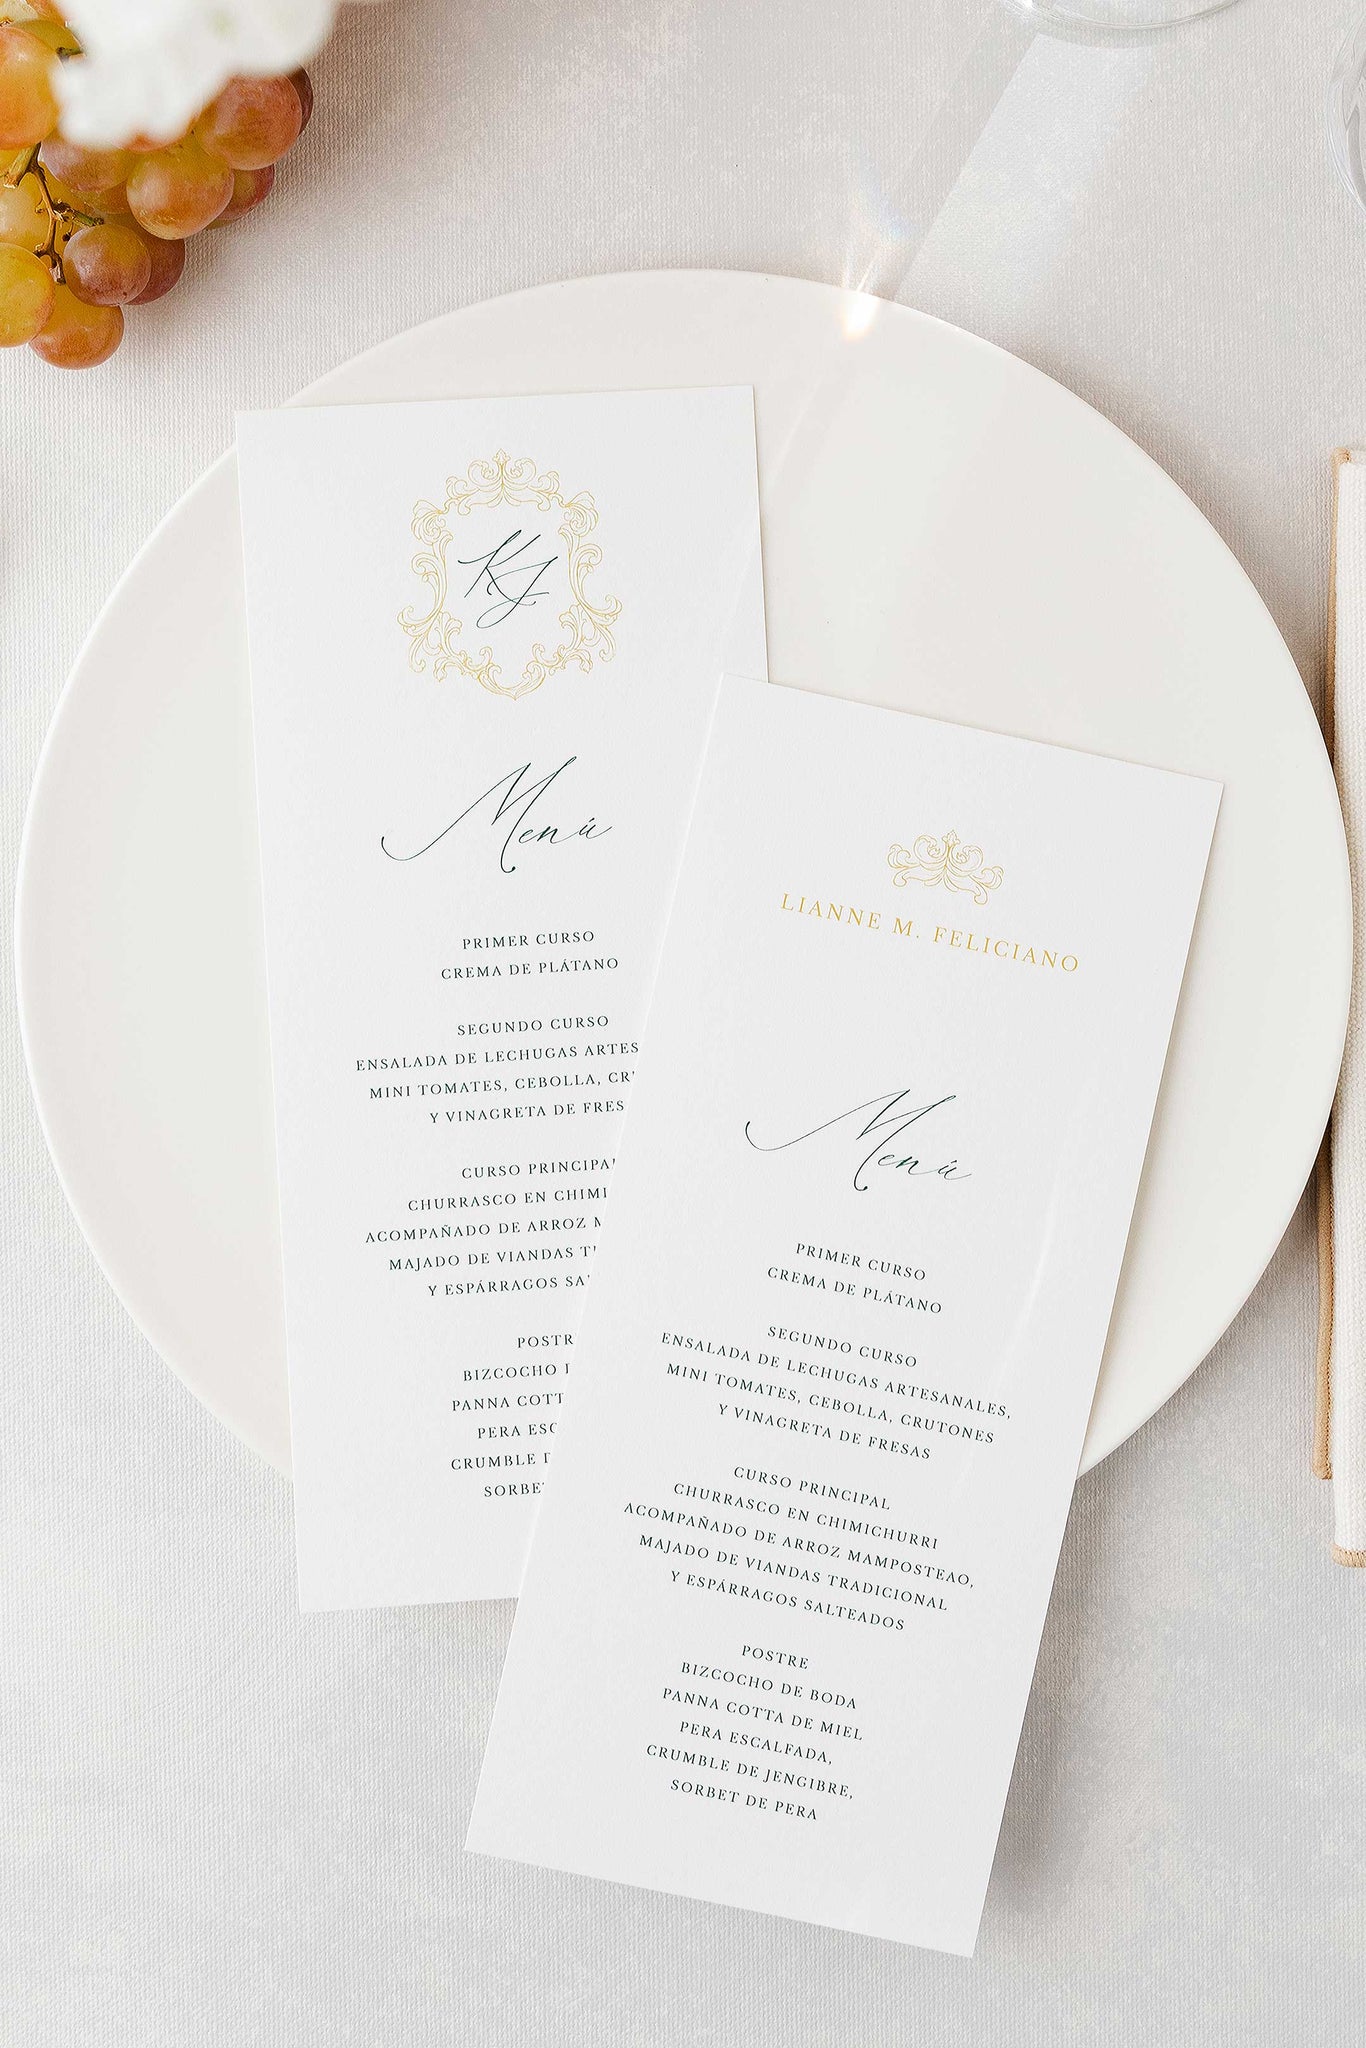 Elegant Wedding Dinner Menu with Royal Monogram based in Bride's Wedding Dress